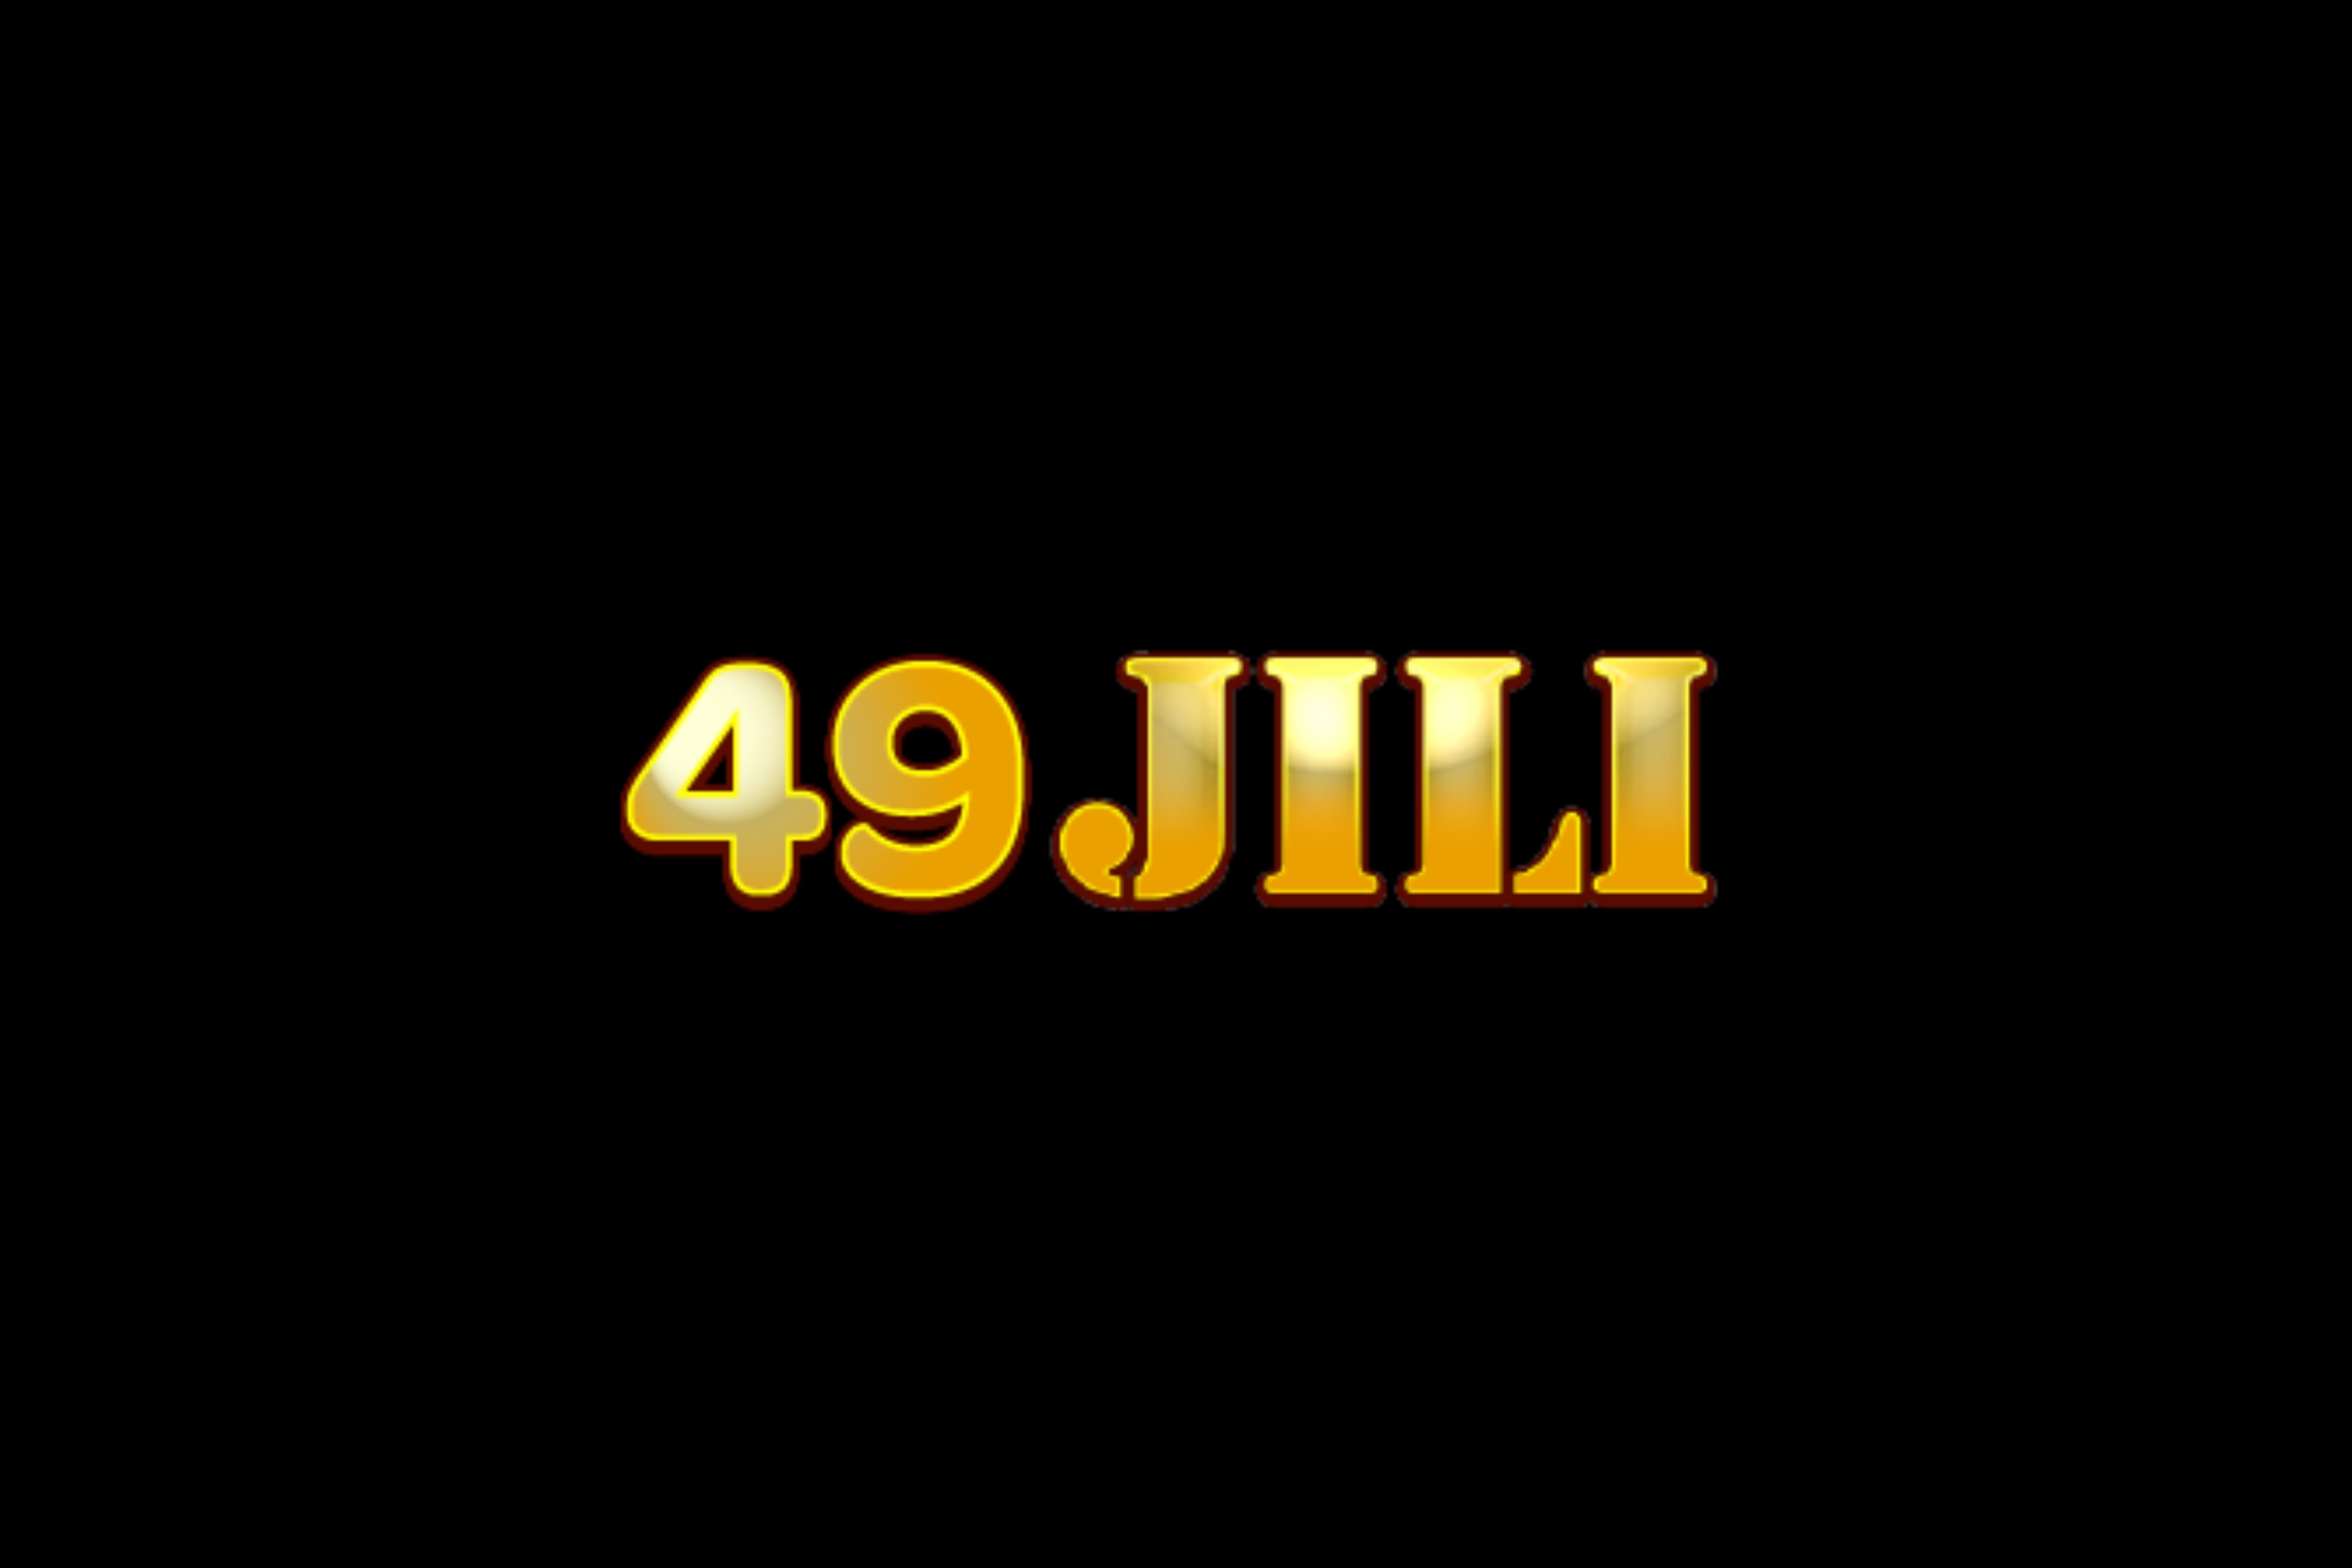 49Jili